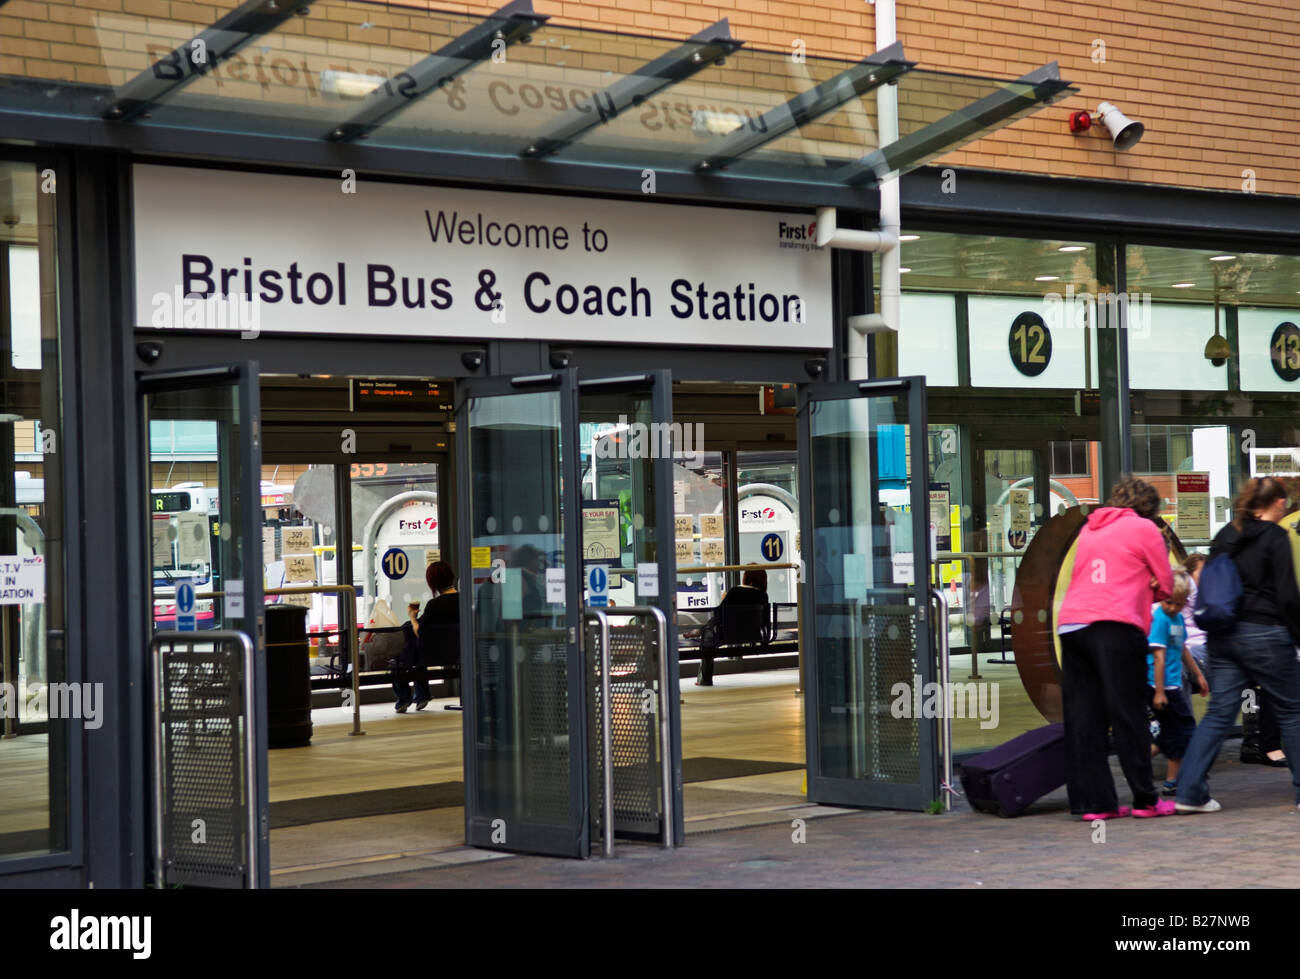 Bristol bus and coach station England Stock Photo - Alamy